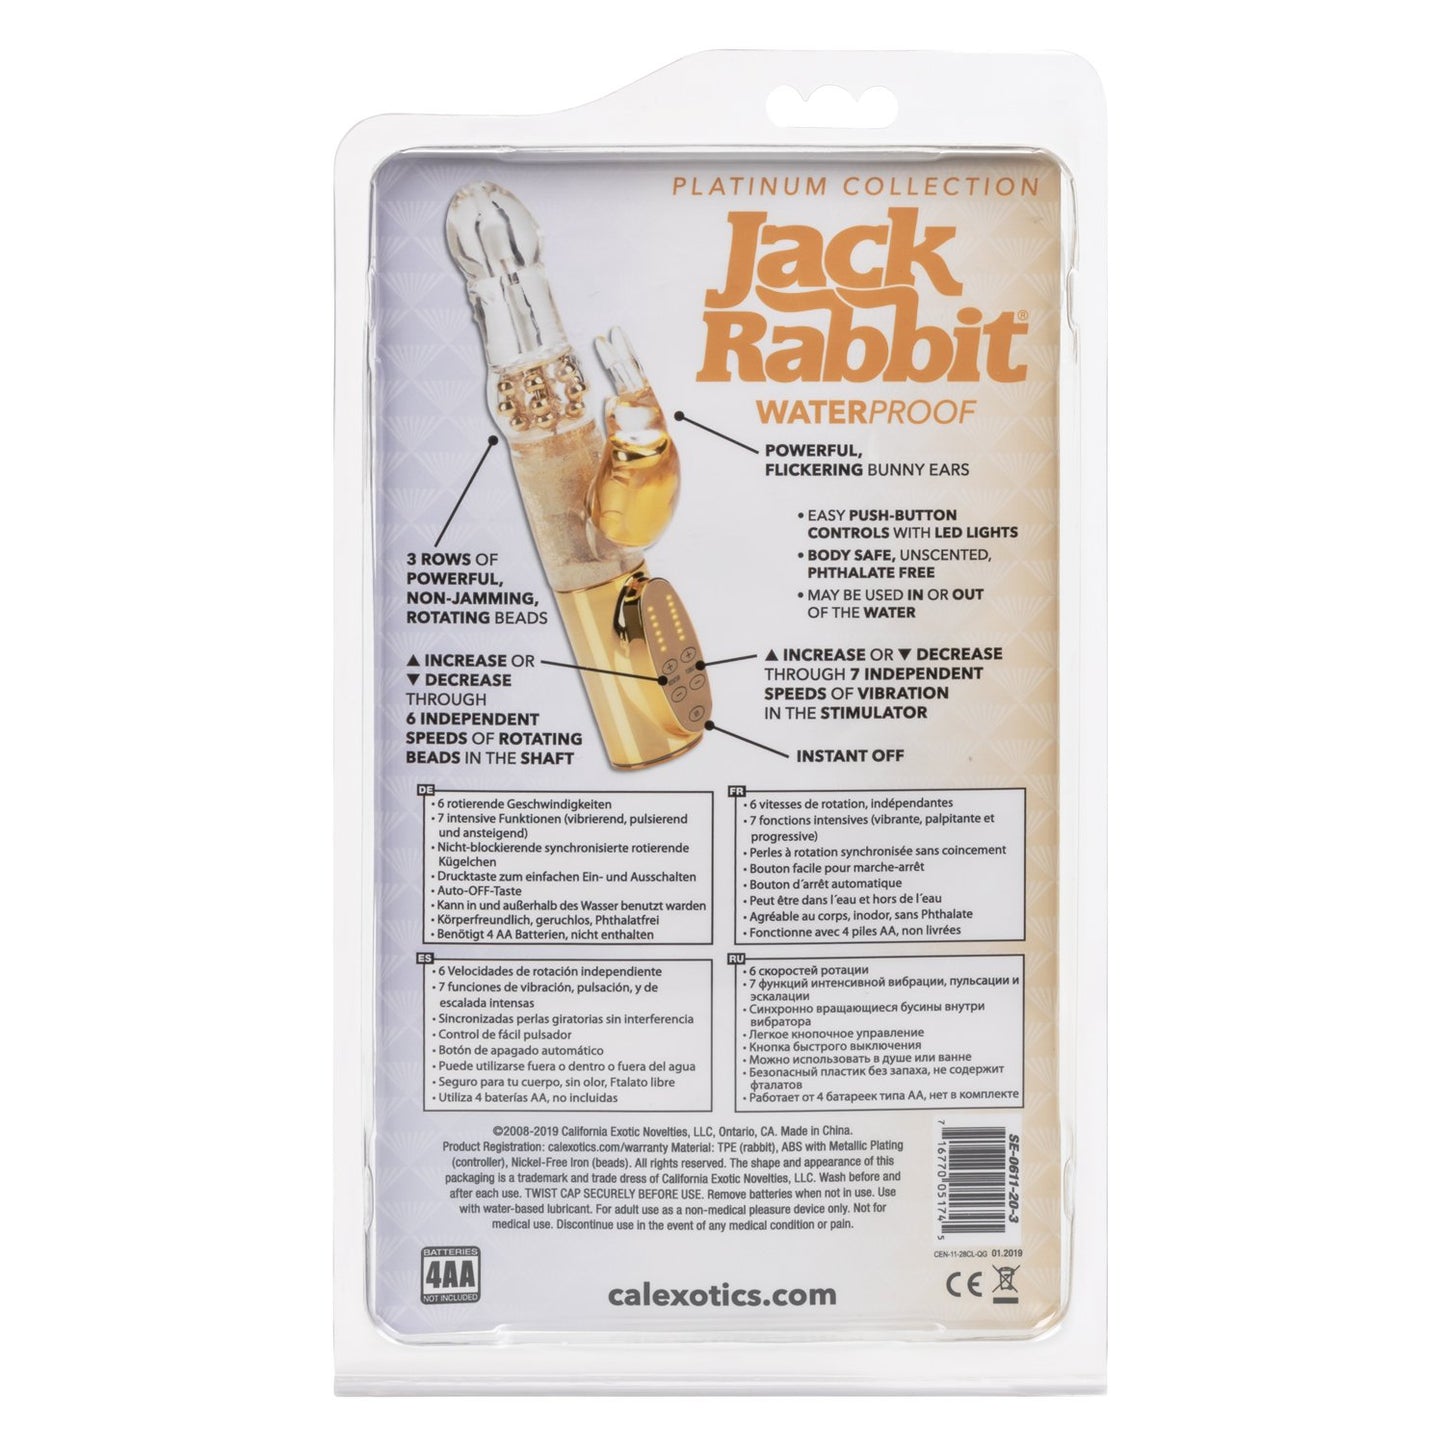 Jack Rabbit Platinum Collection Jack Rabbit